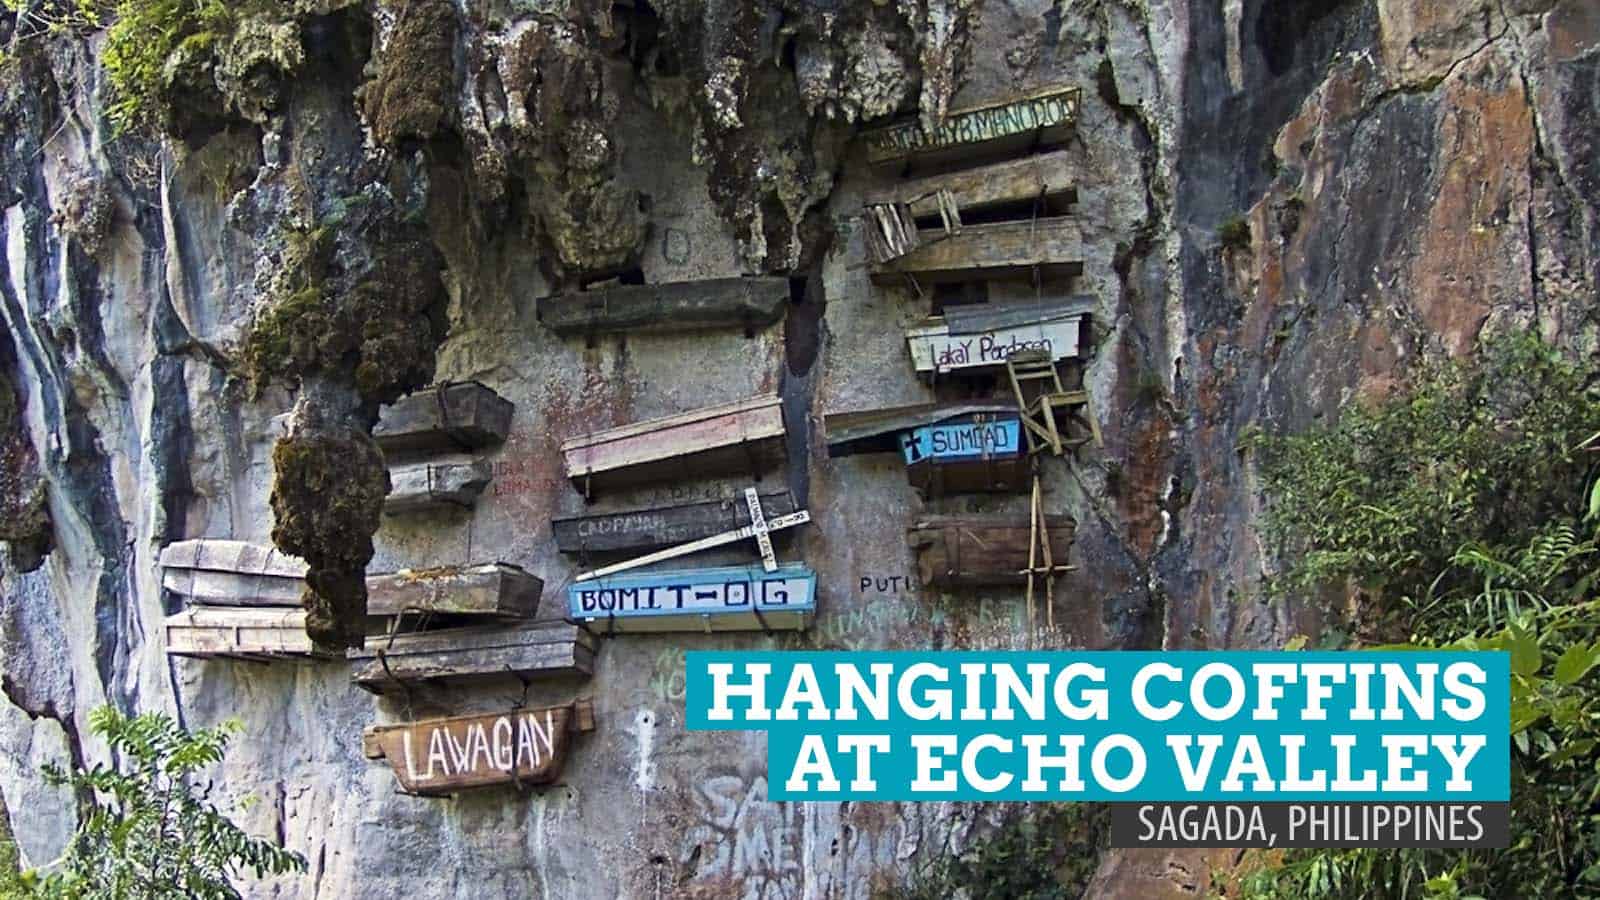 The Hanging Coffins at Echo Valley: Sagada, Philippines | The Traveler